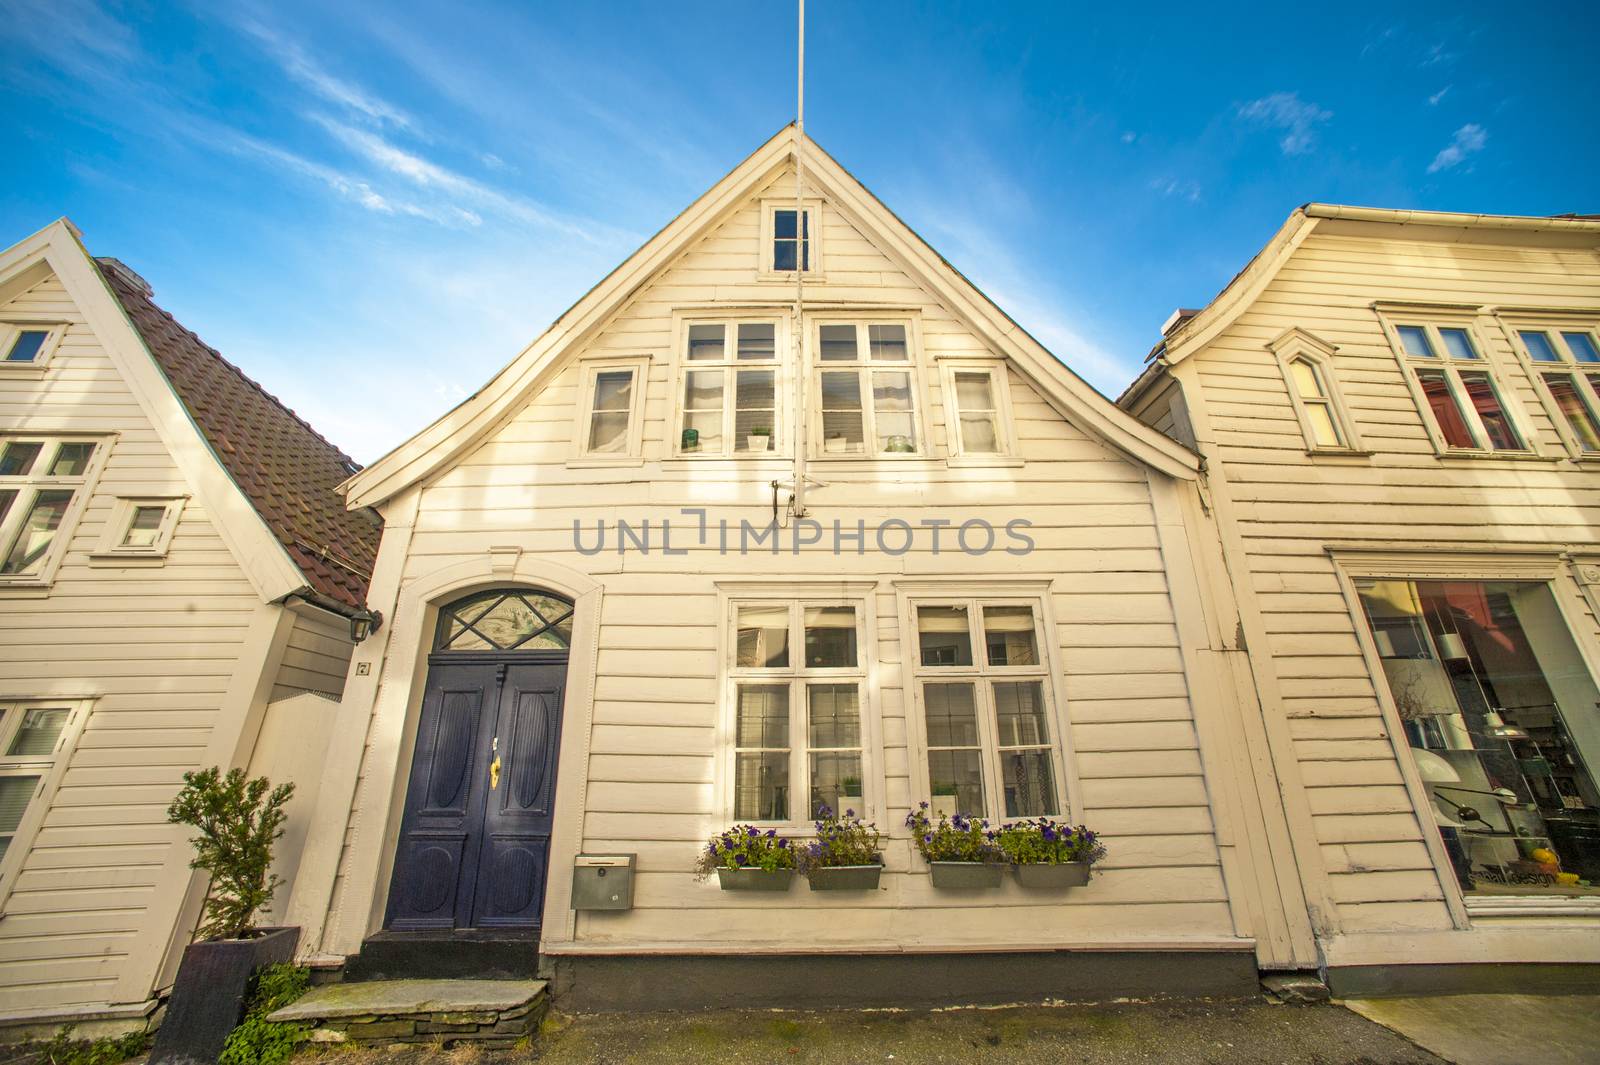 Bergen wooden house by Alenmax